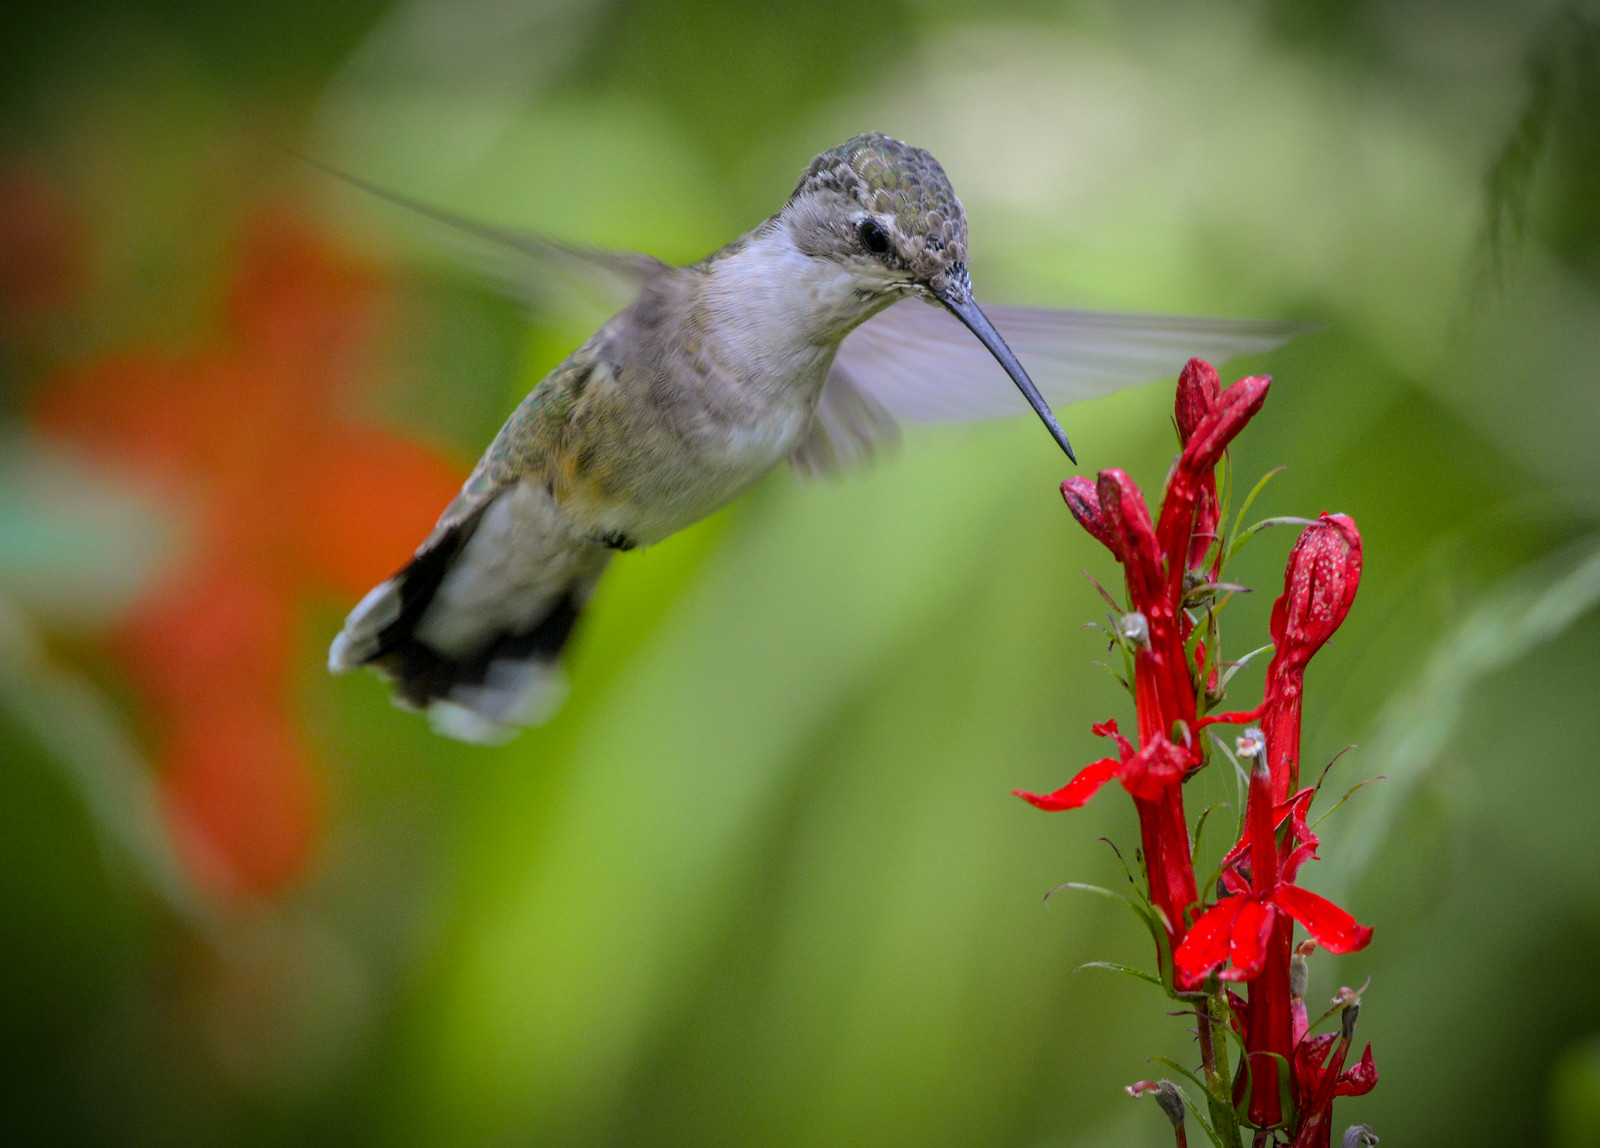 A hummingbird visits the flowers of Lobelia cardinalis.